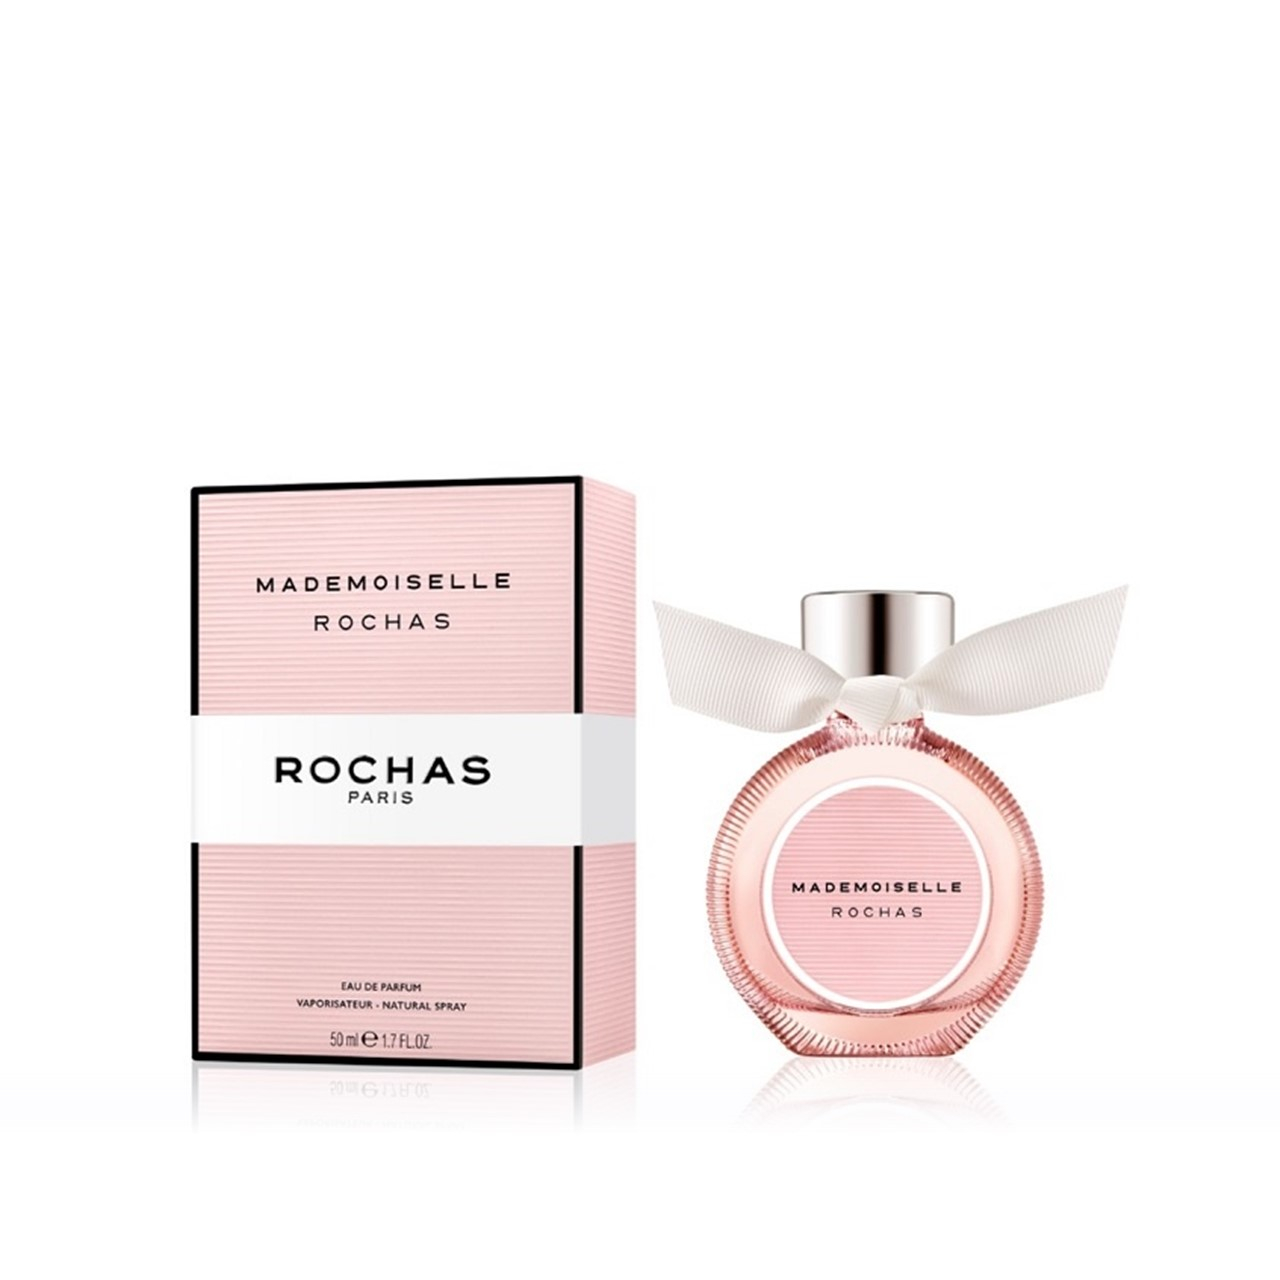 Rochas Mademoiselle Rochas Eau de Parfum 50ml (1.7fl oz)